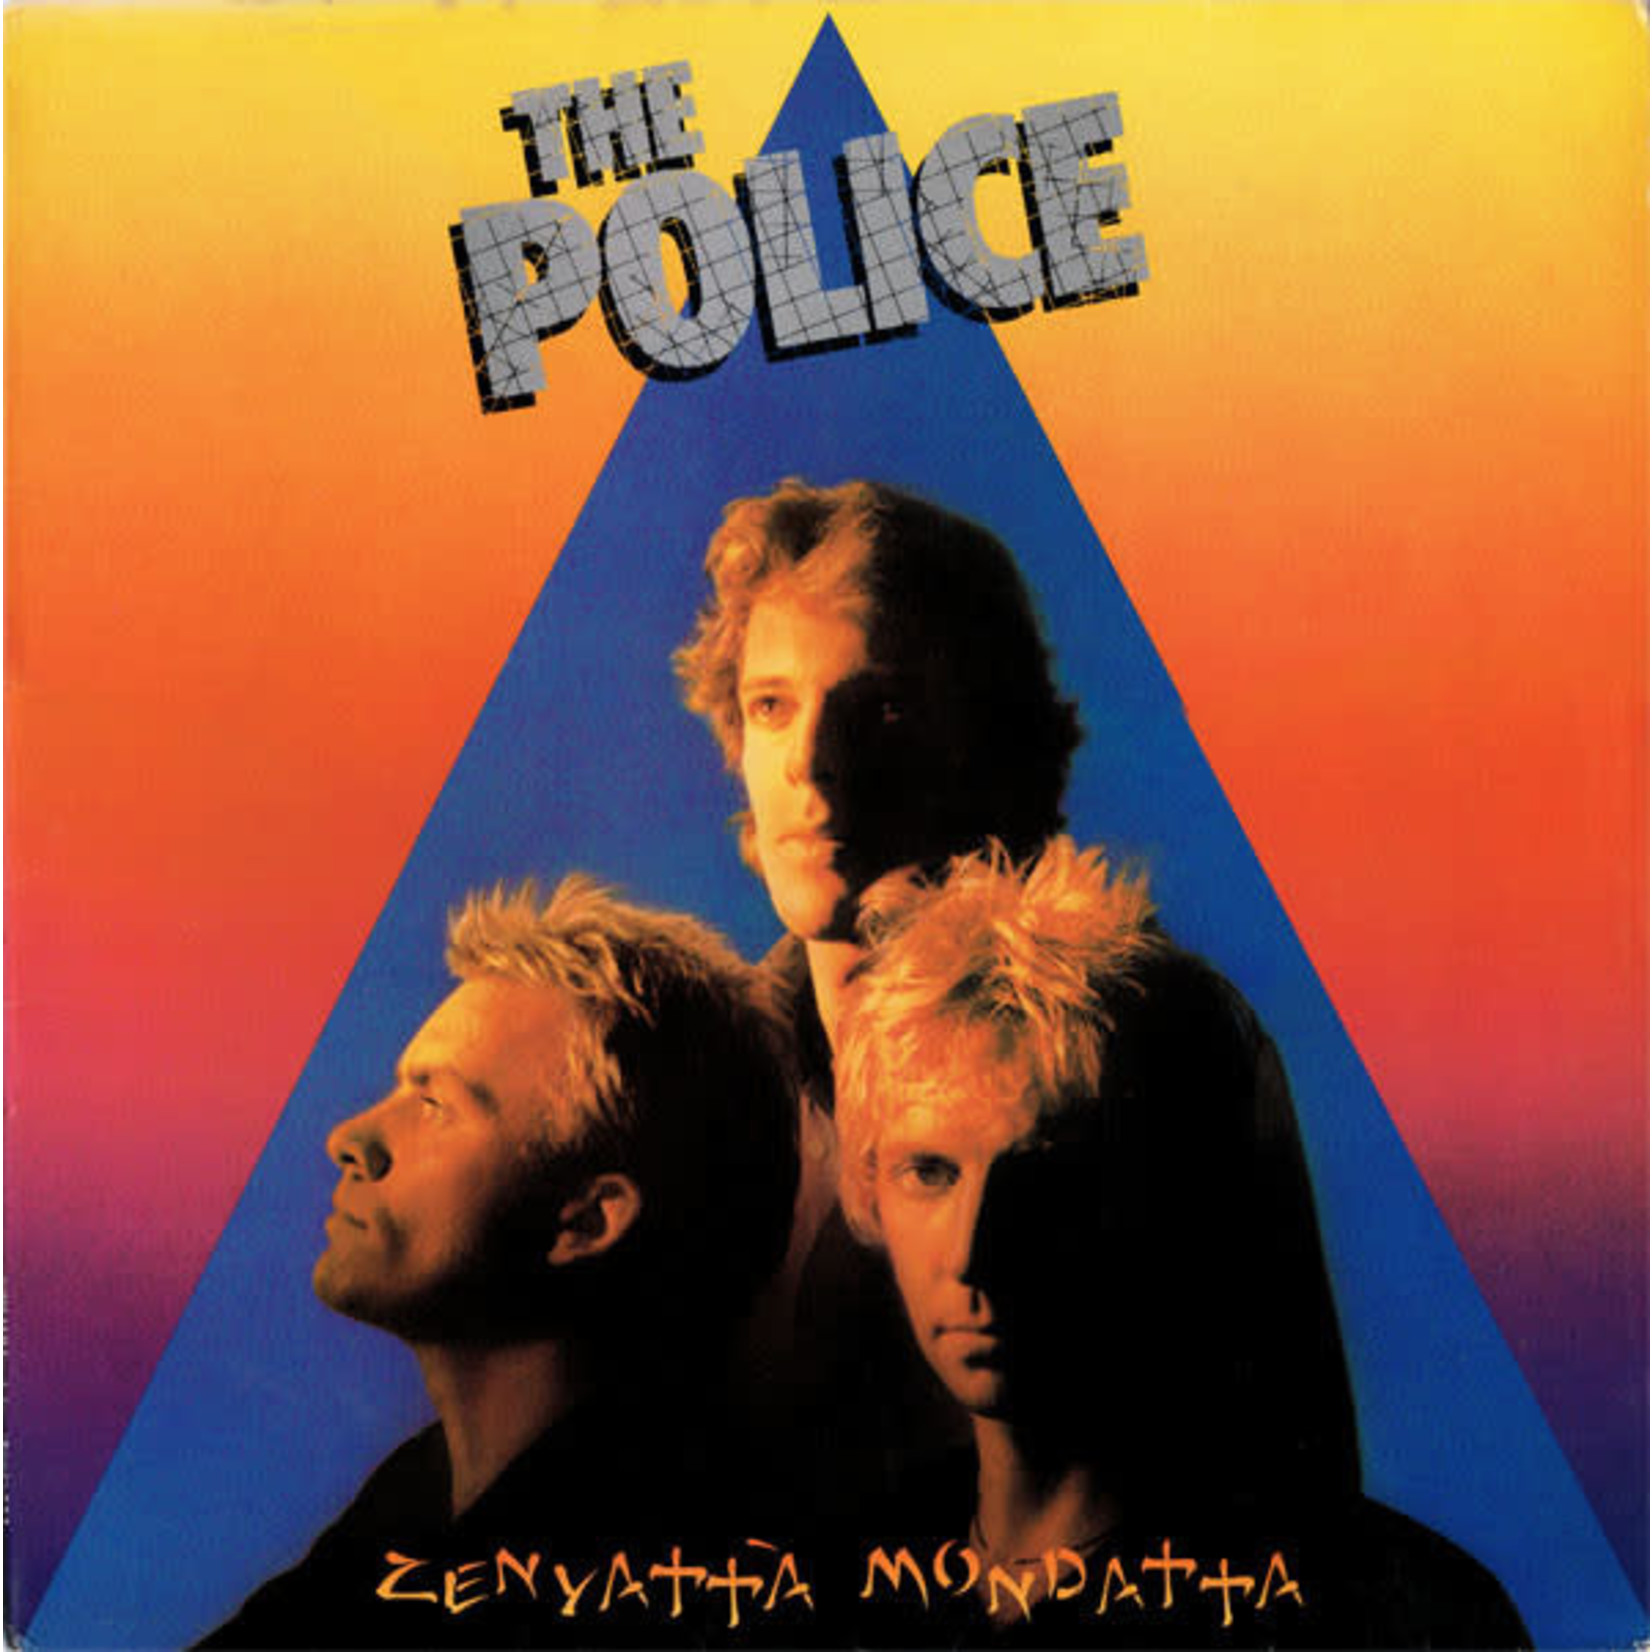 The Police The Police – Zenyatta Mondatta (VG, 1980, LP, A&M Records – SP 4831)